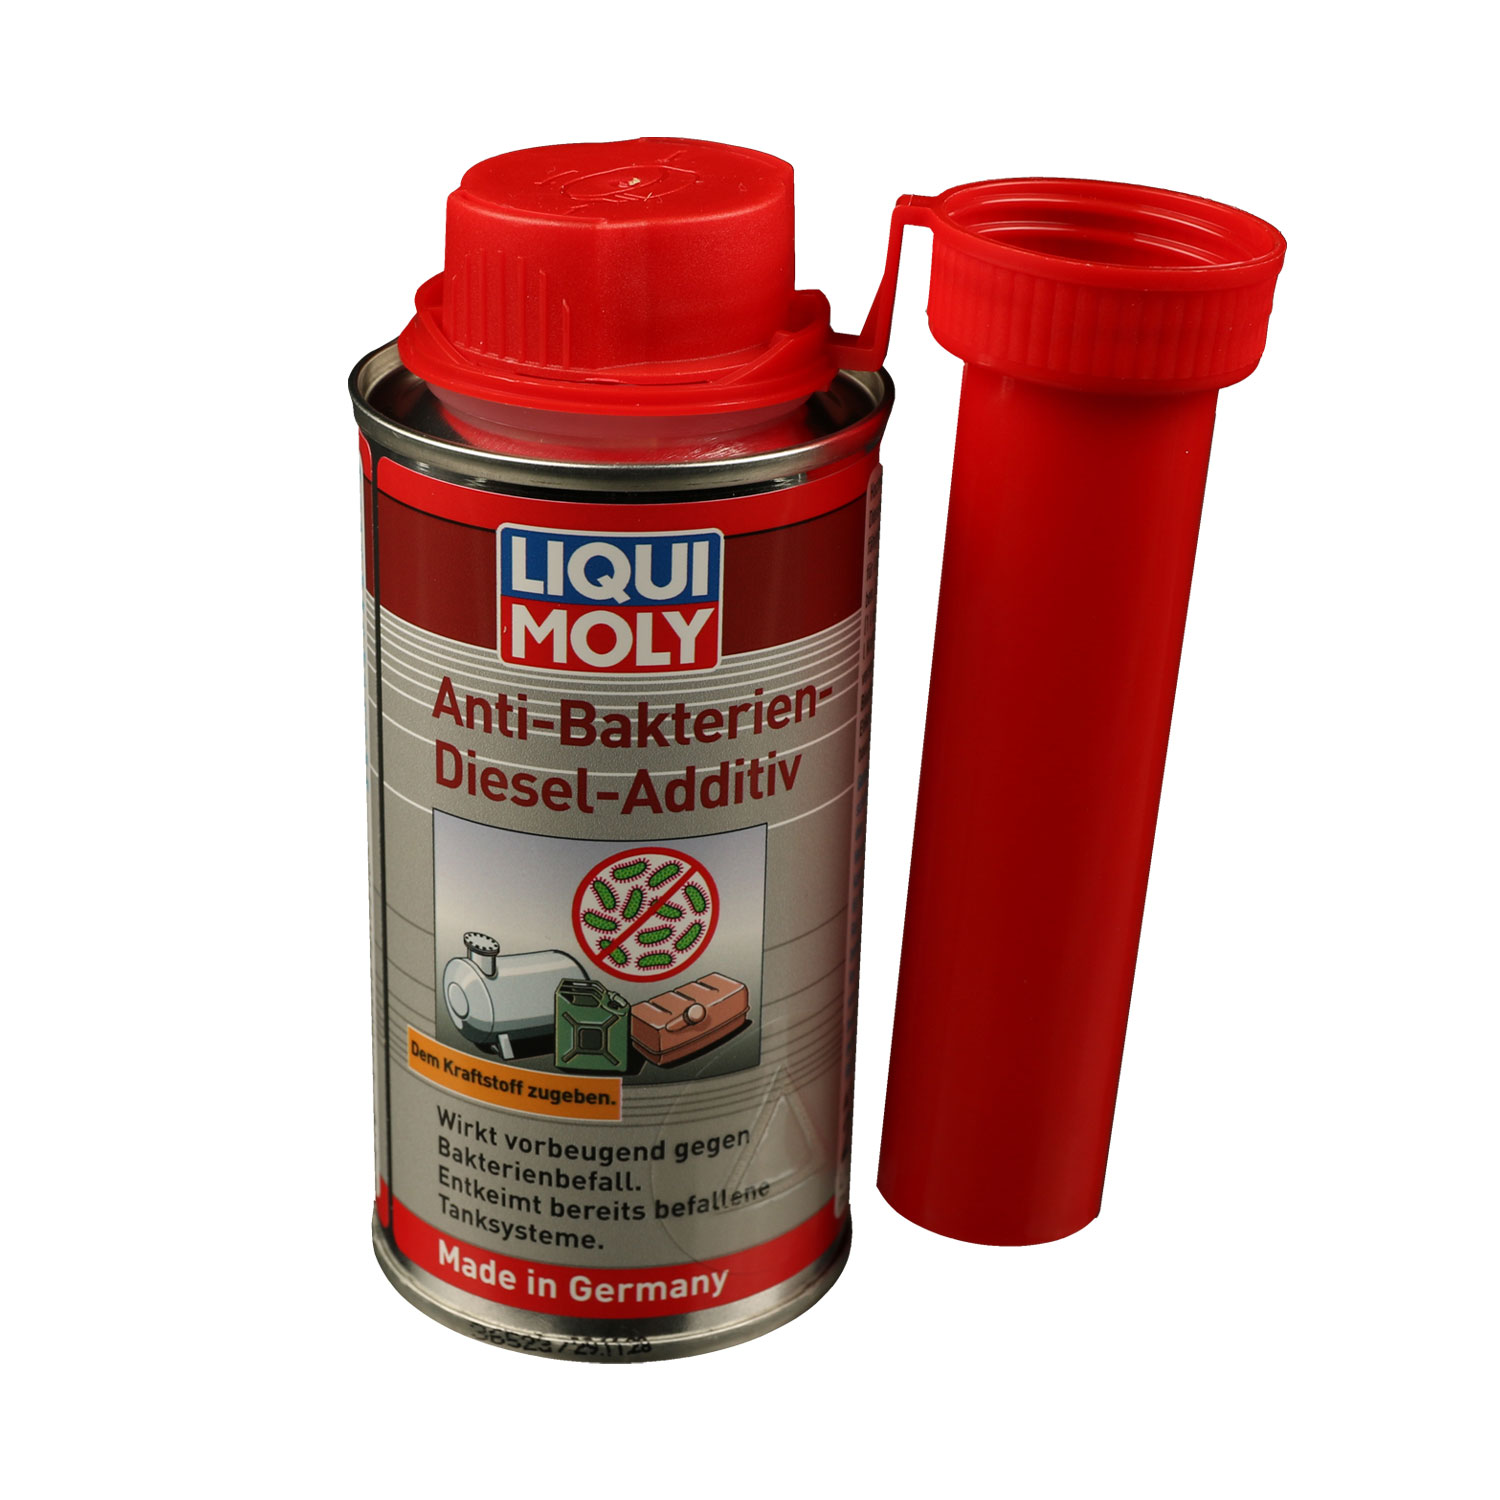 LIQUI MOLY - Anti-Bakterien-Diesel-Additiv